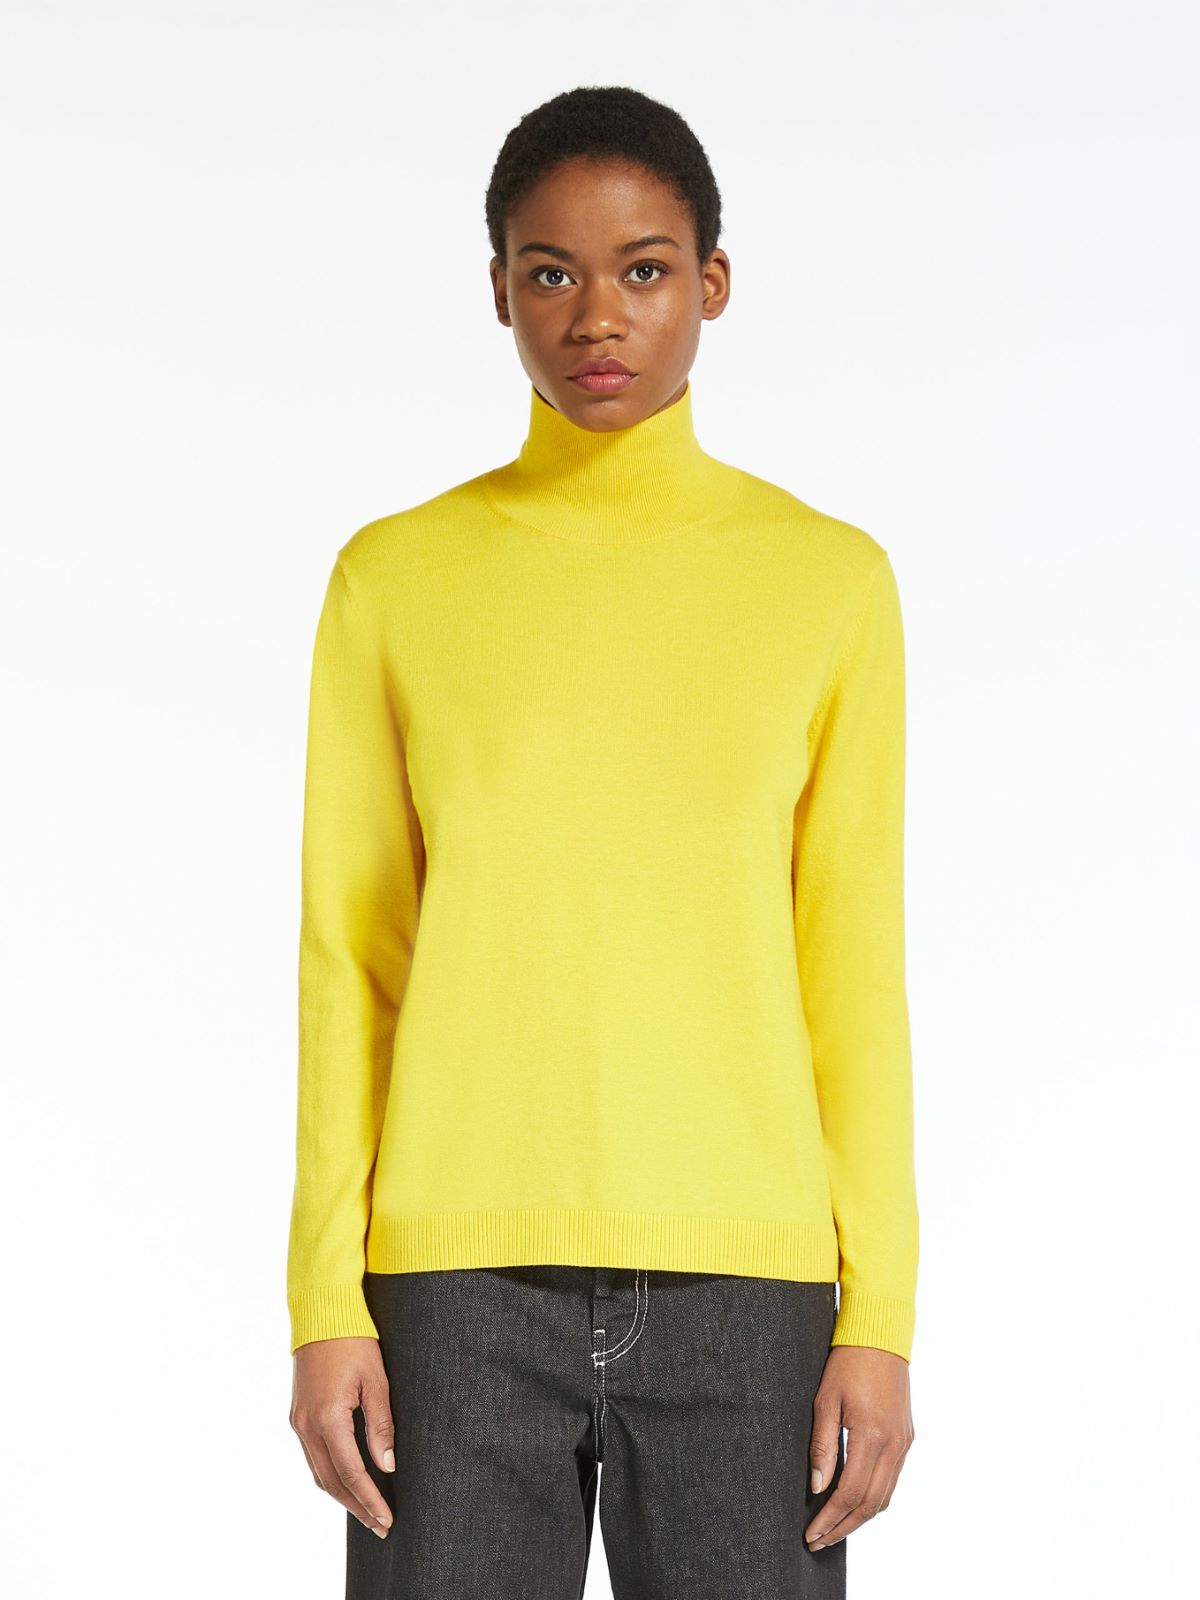 Silk and wool yarn sweater, bright yellow | Weekend Max Mara